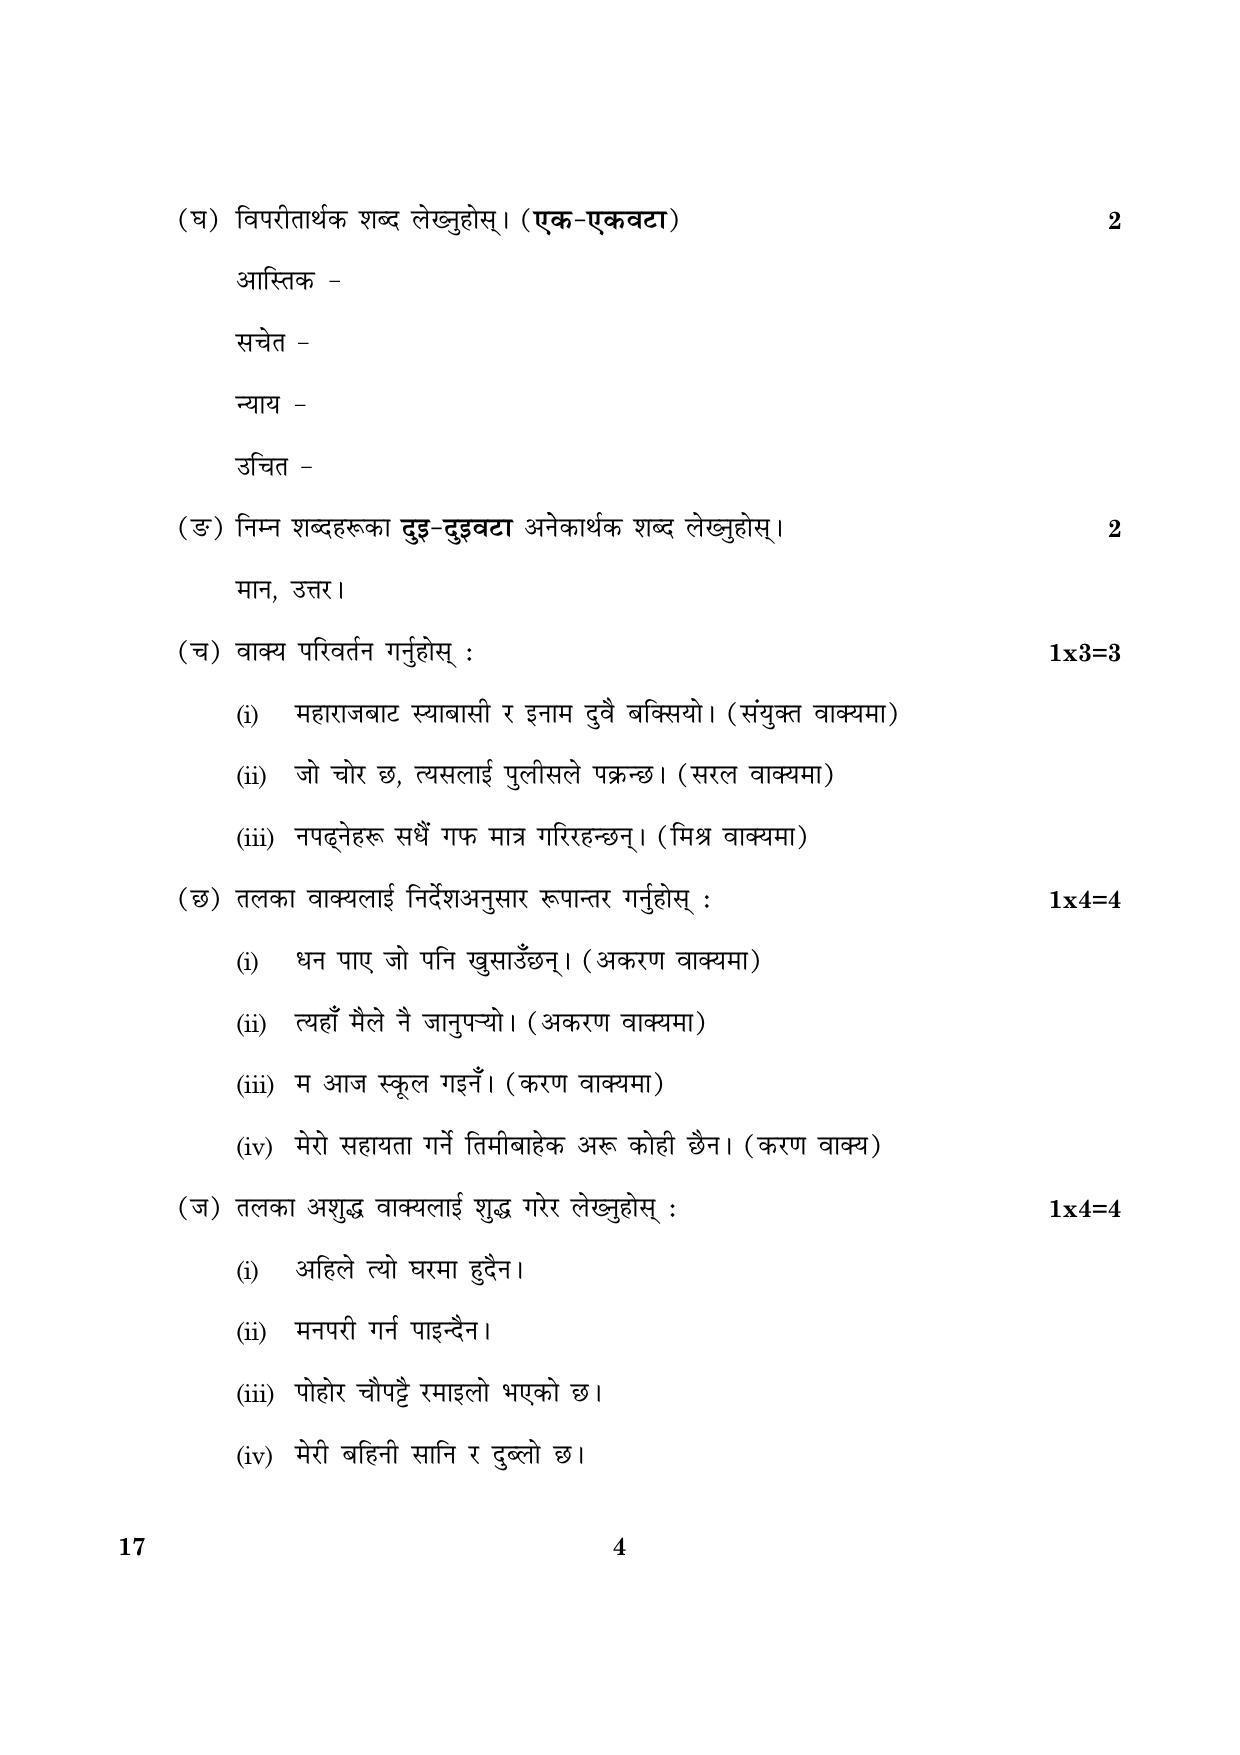 CBSE Class 10 017 Nepali 2016 Question Paper - Page 4